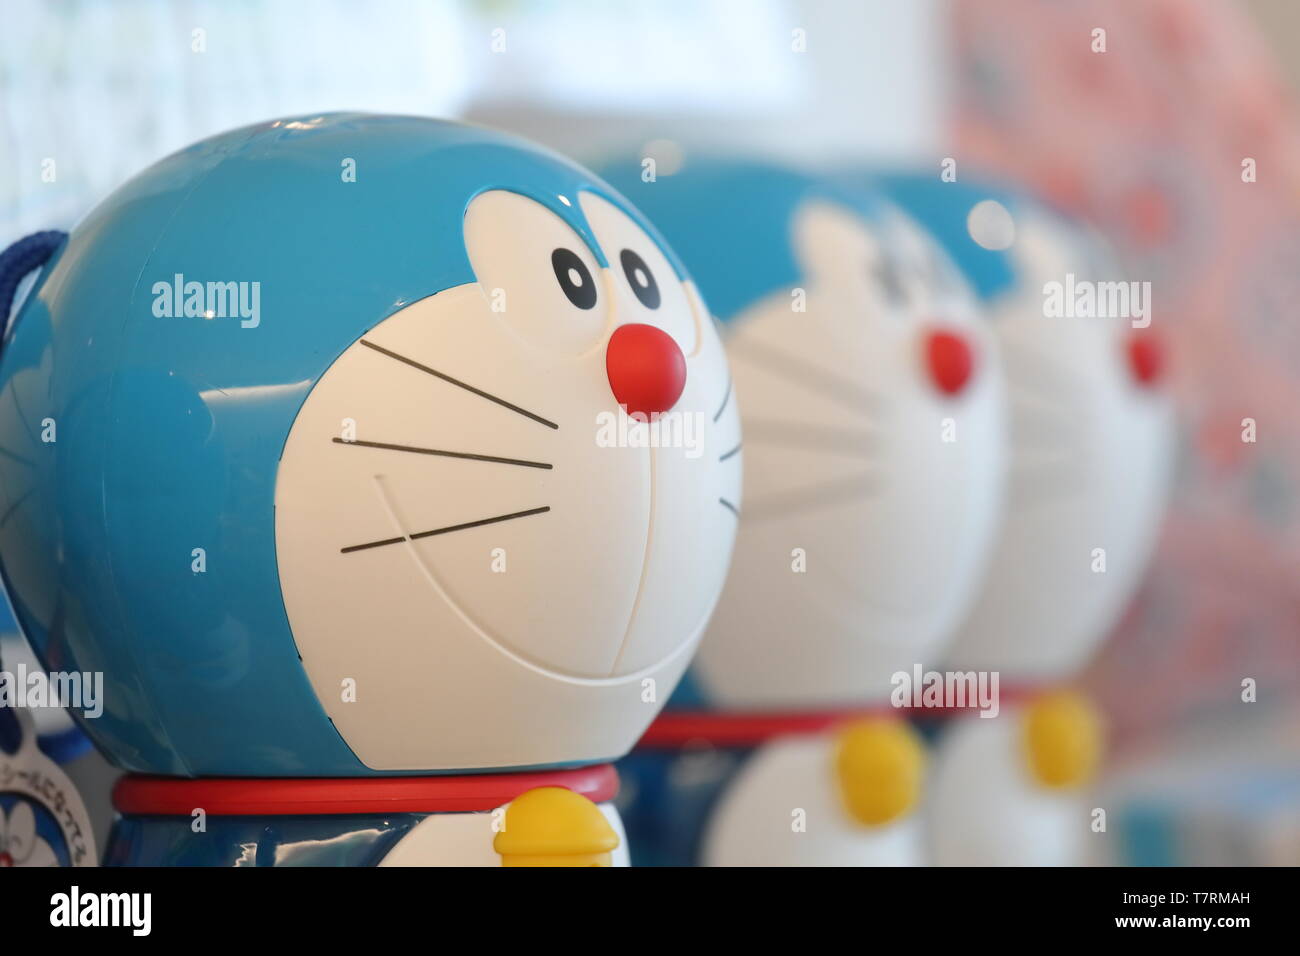 Doraemon Stuffed Plush Japan Anime 10 Blue White Gadget Cat